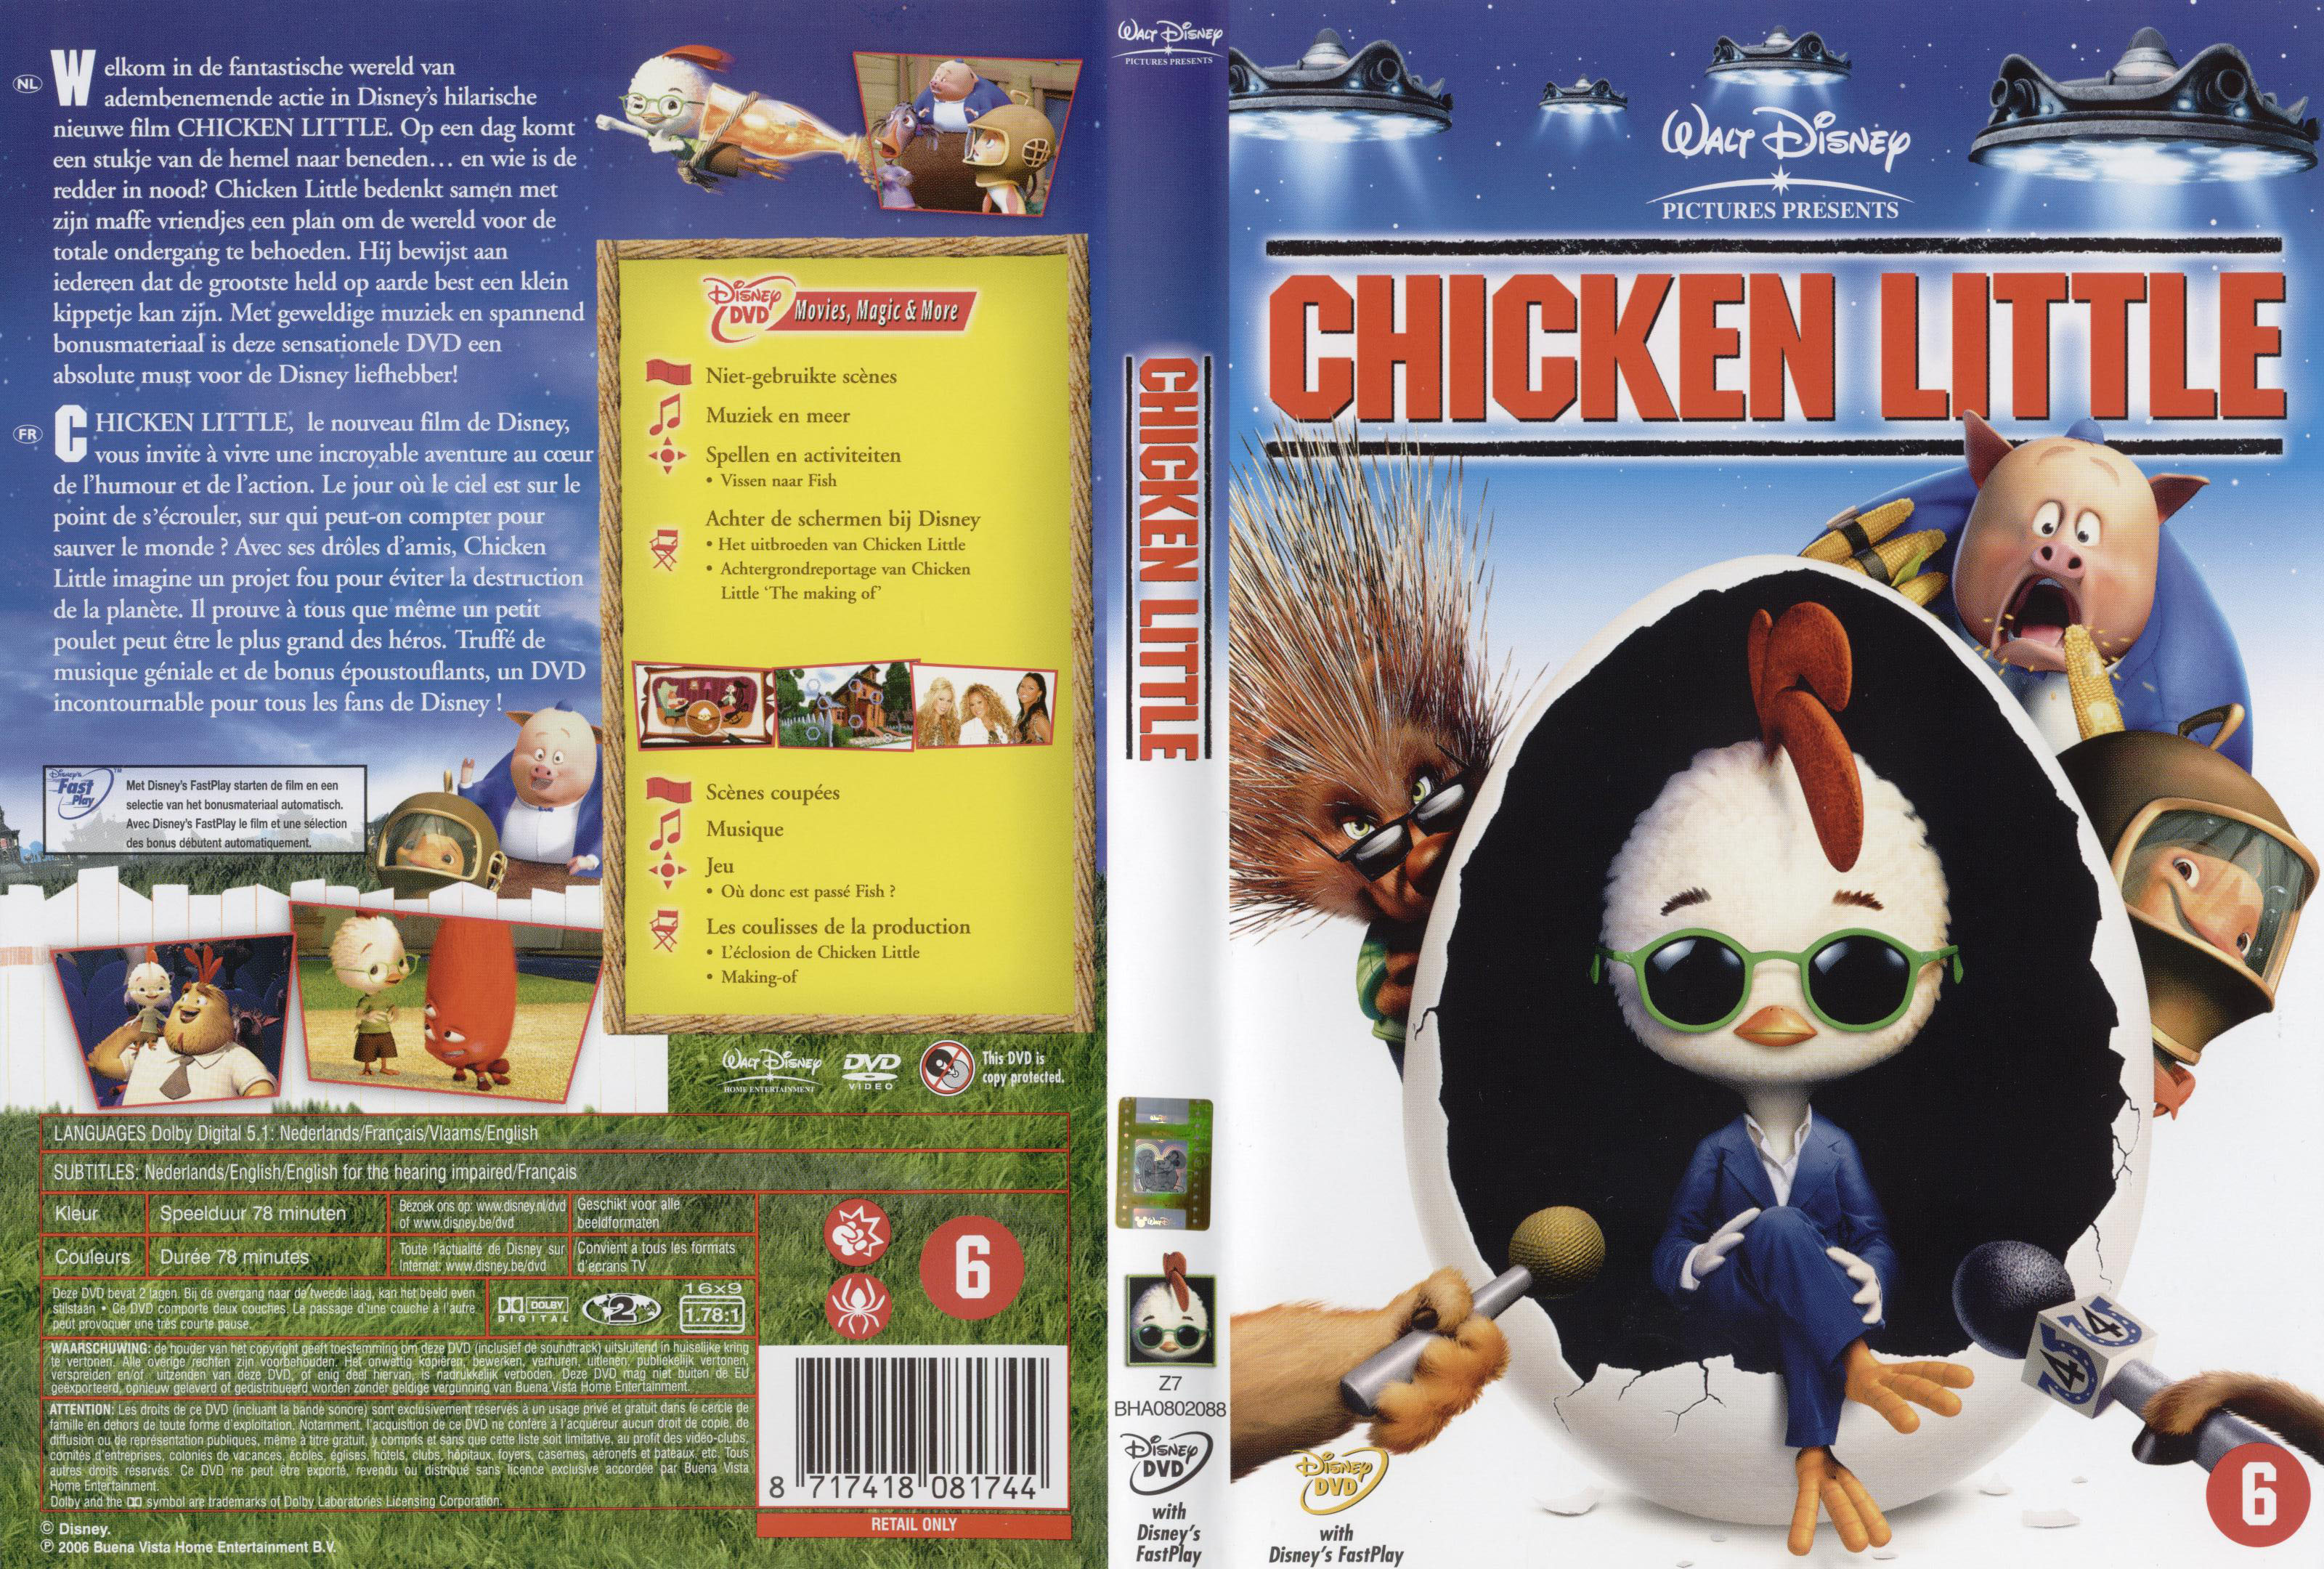 Jaquette DVD Chicken little v2